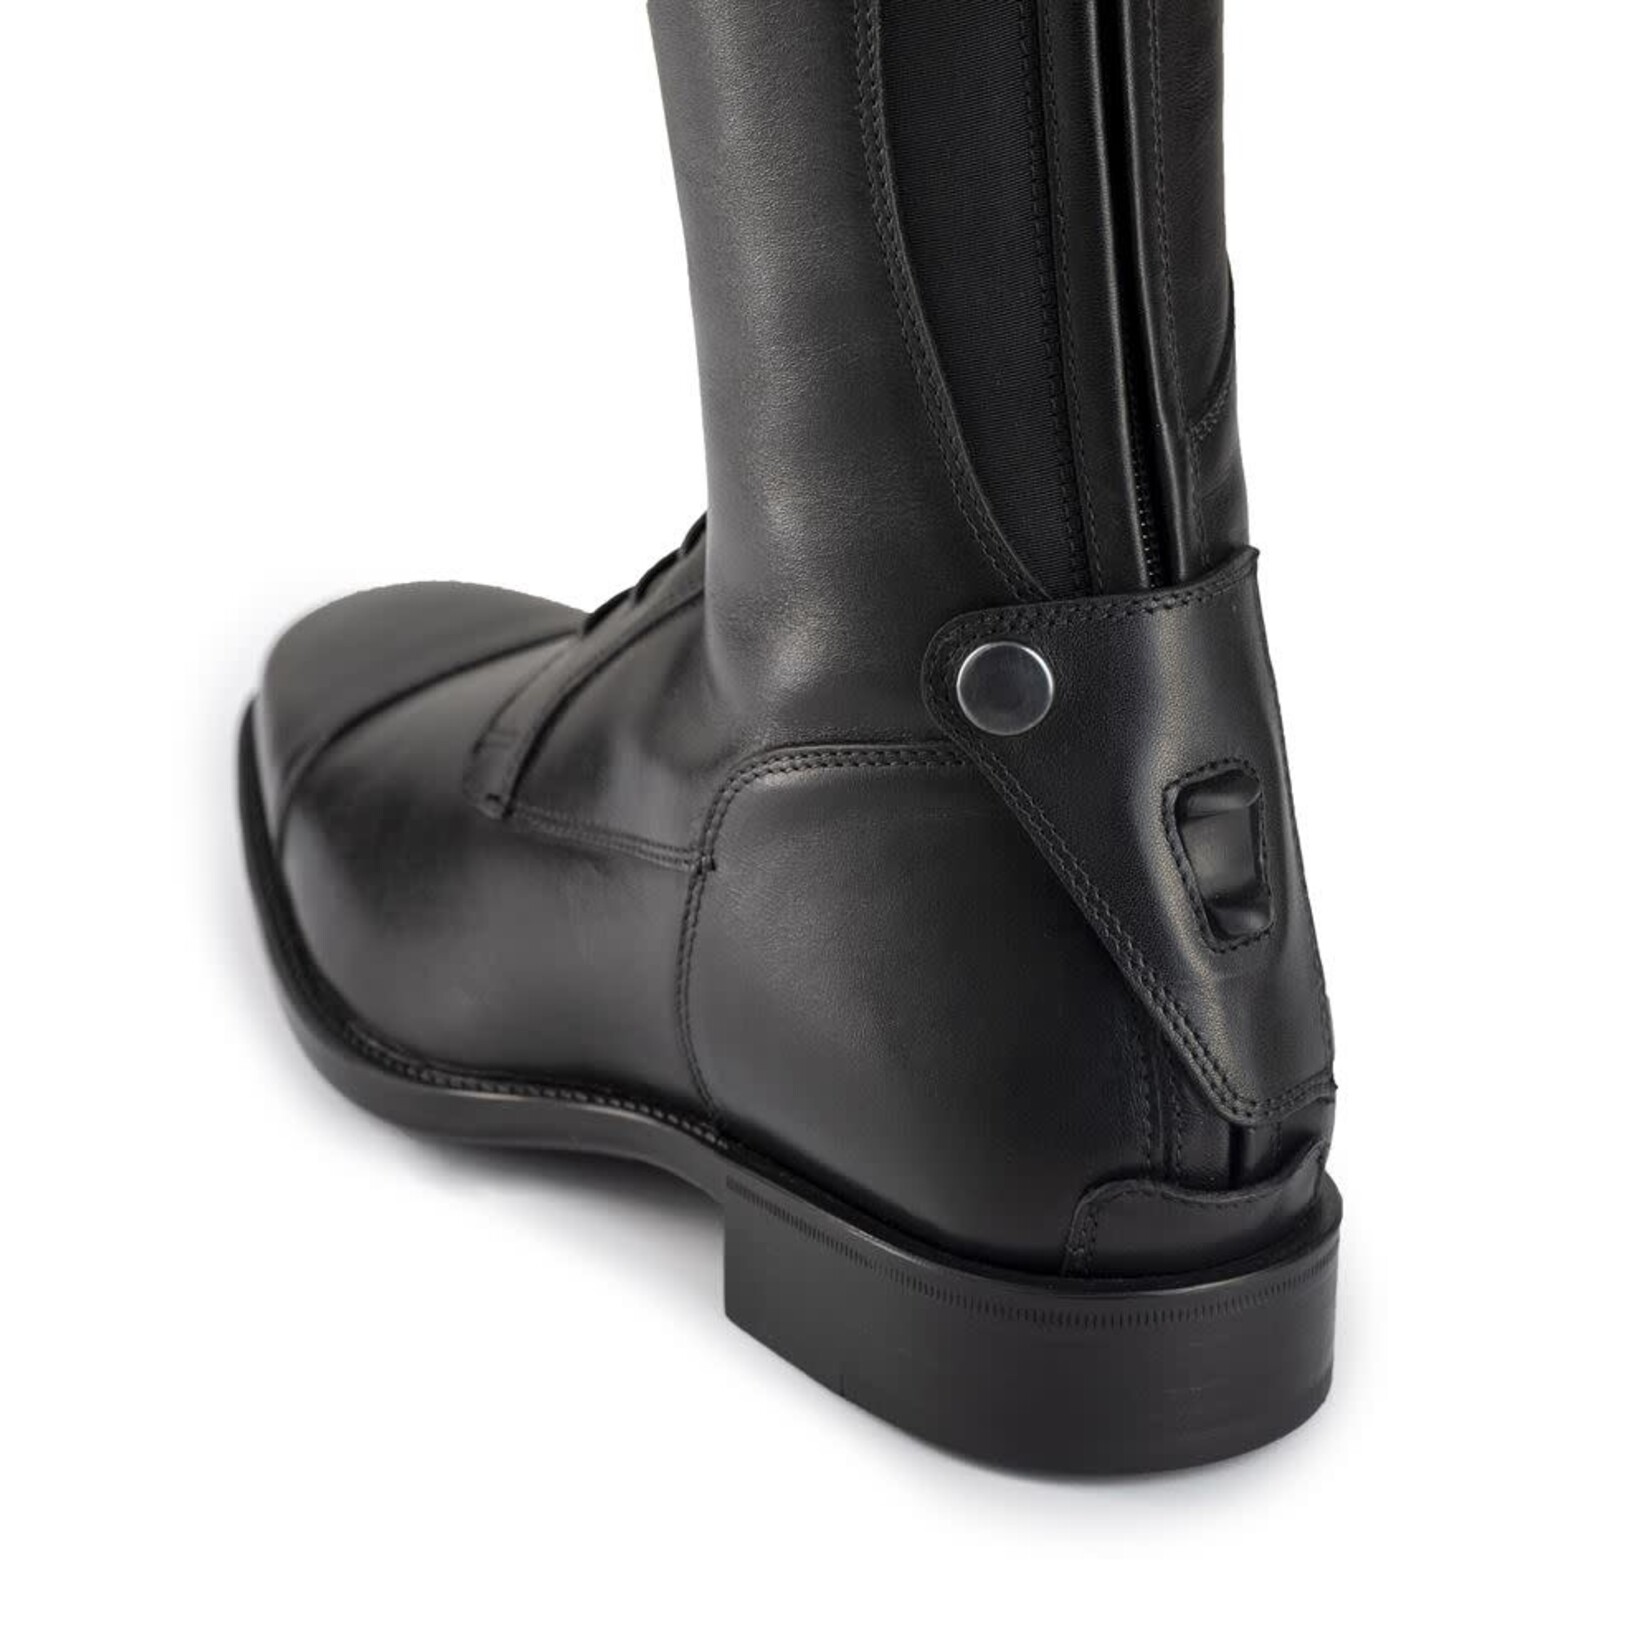 Deniro Boot Deniro Amabile New Pro Tricolore Line Smooth Leather Dress Tall Boot